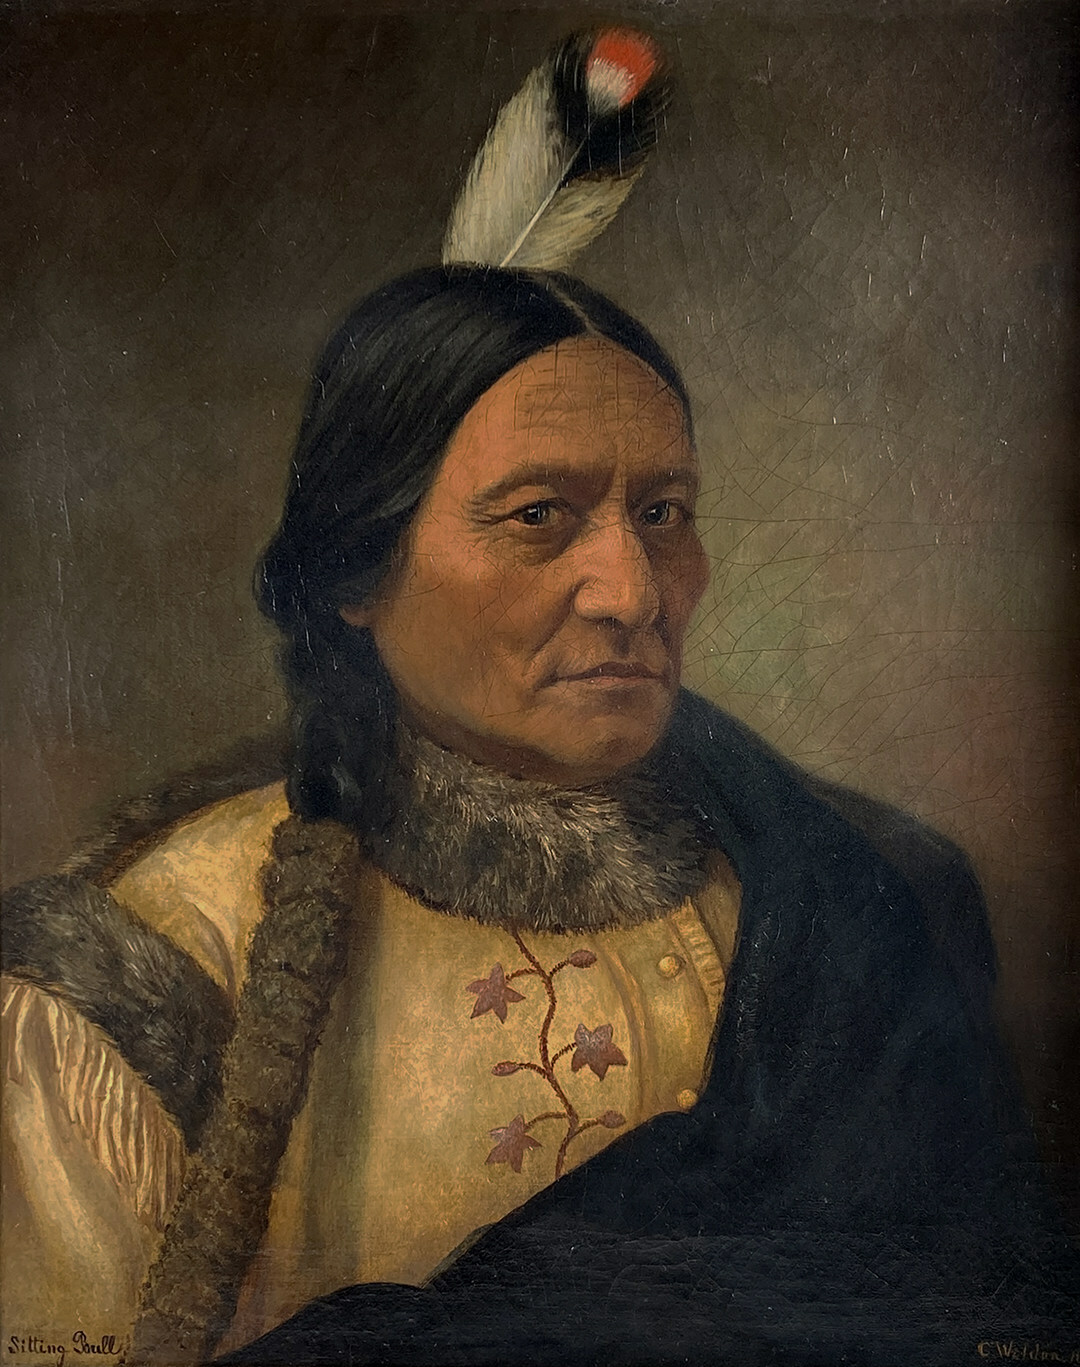 Sitting Bull, 1890, by Caroline Weldon